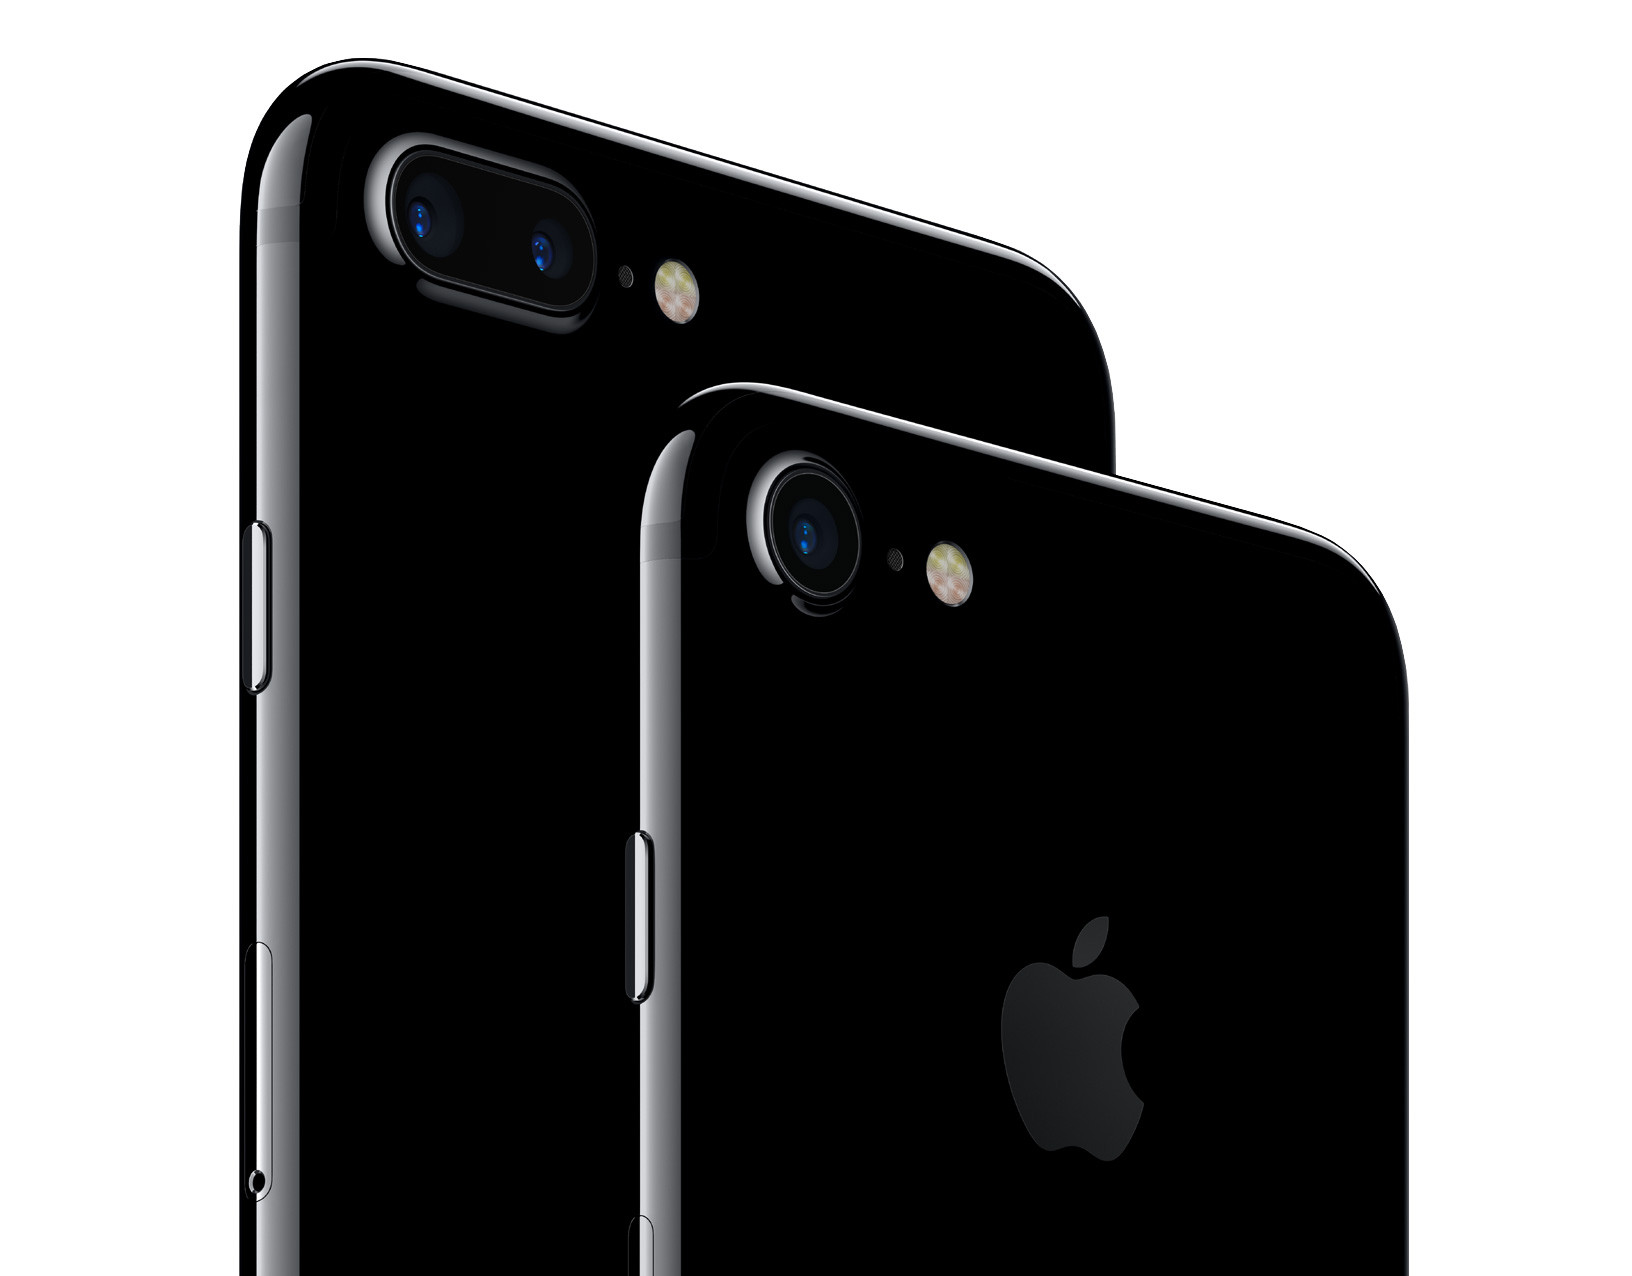 Беспроводная революция: iPhone 7 и другие новинки от Apple